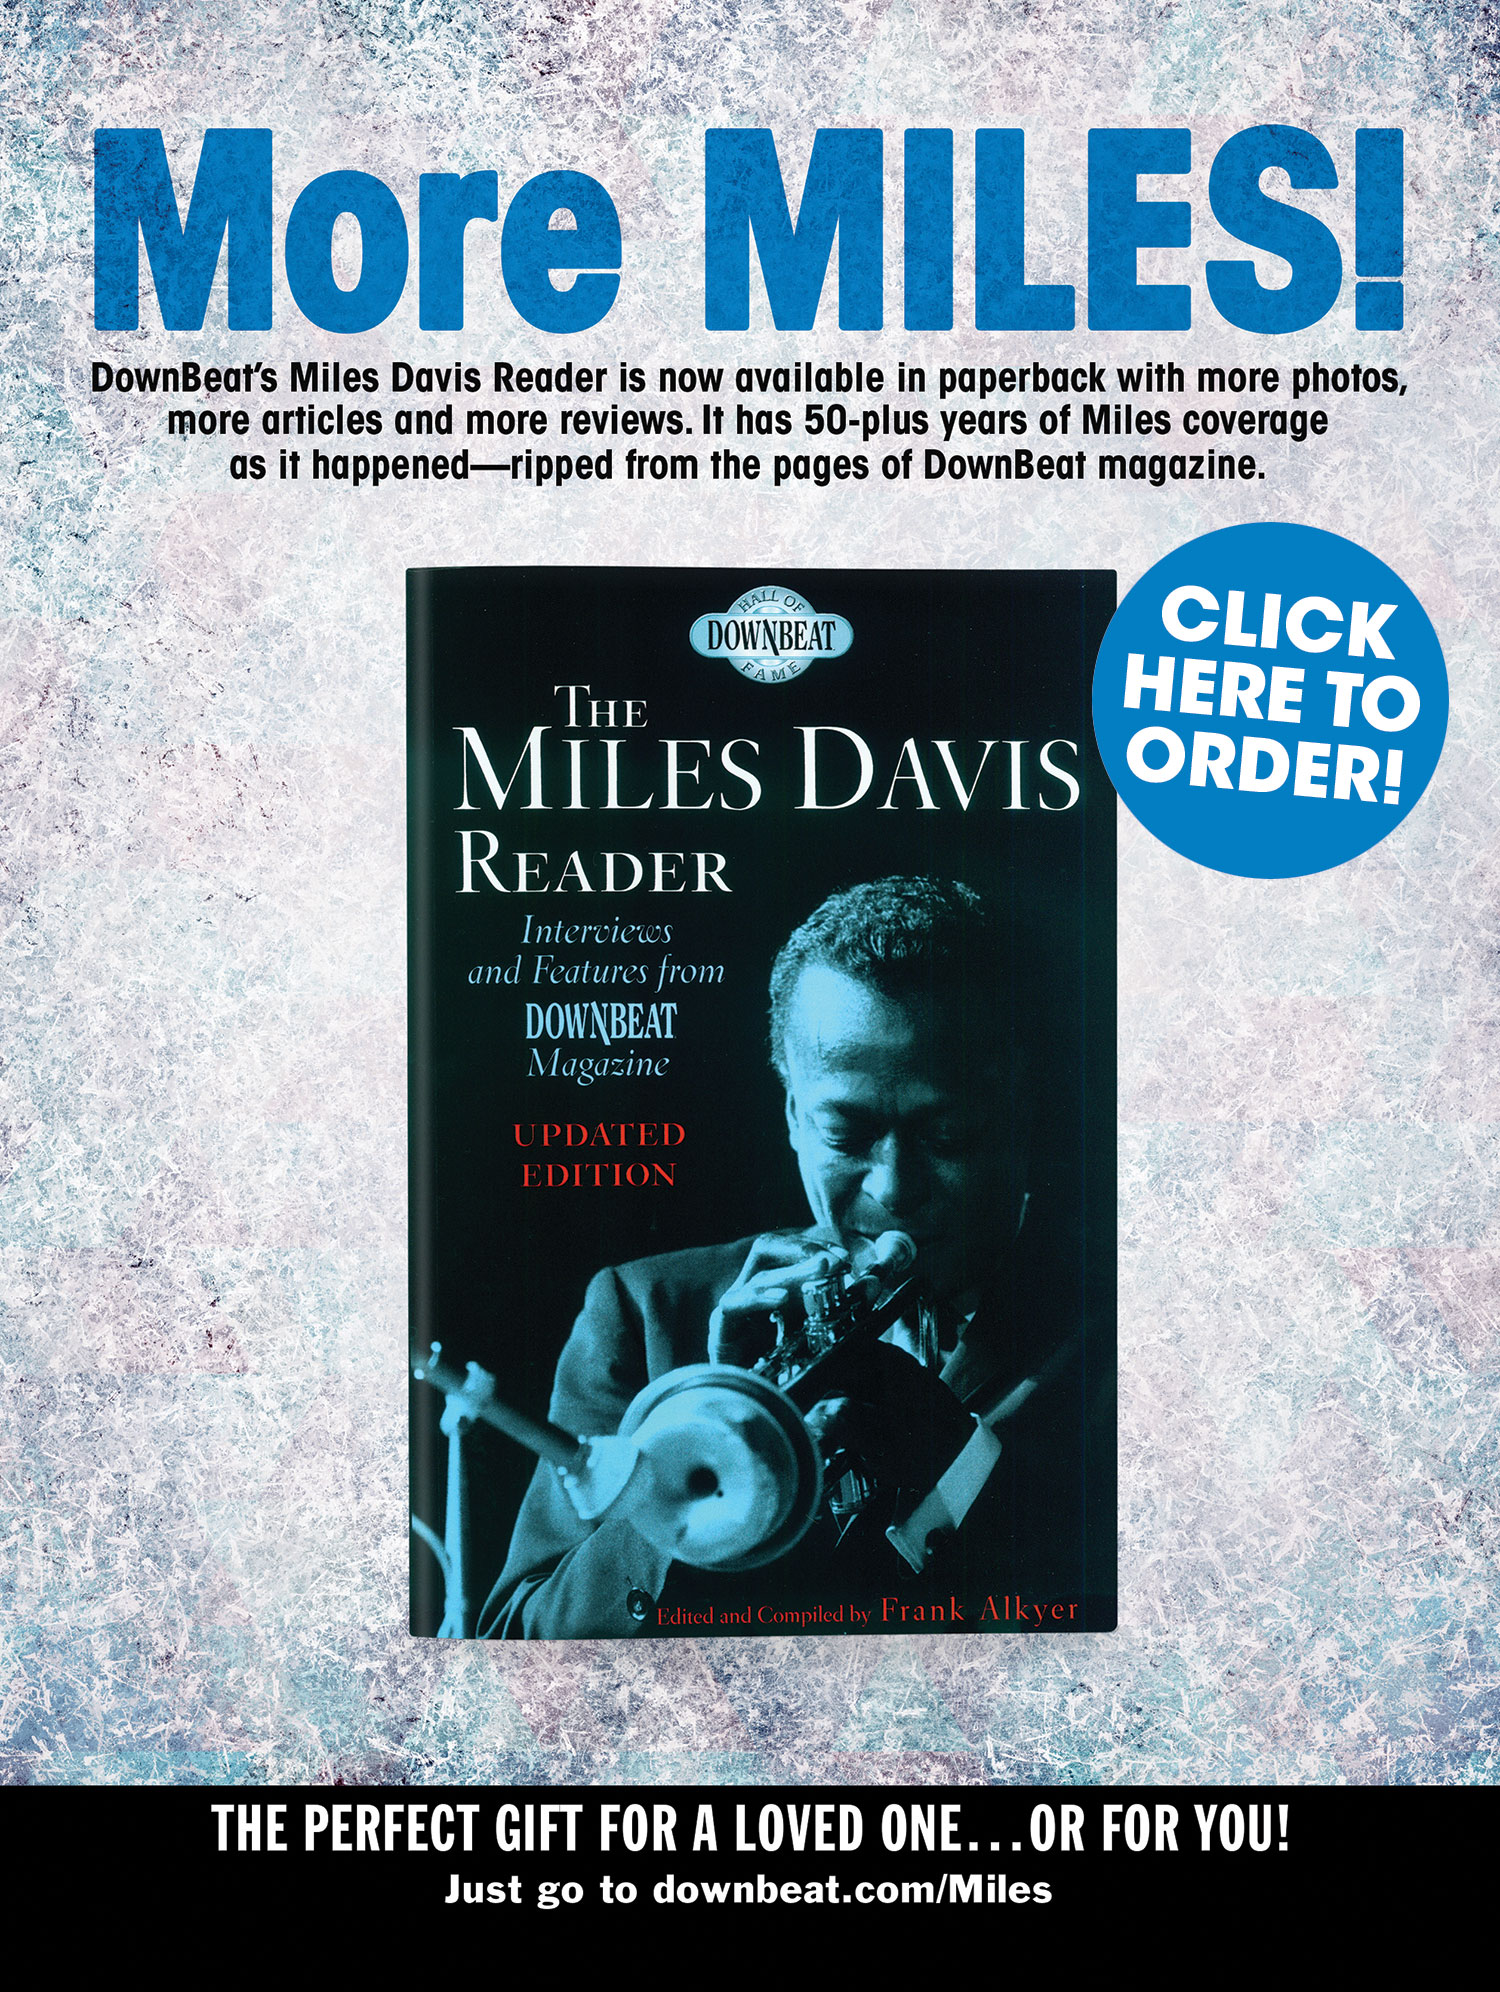 The Miles Davis Reader